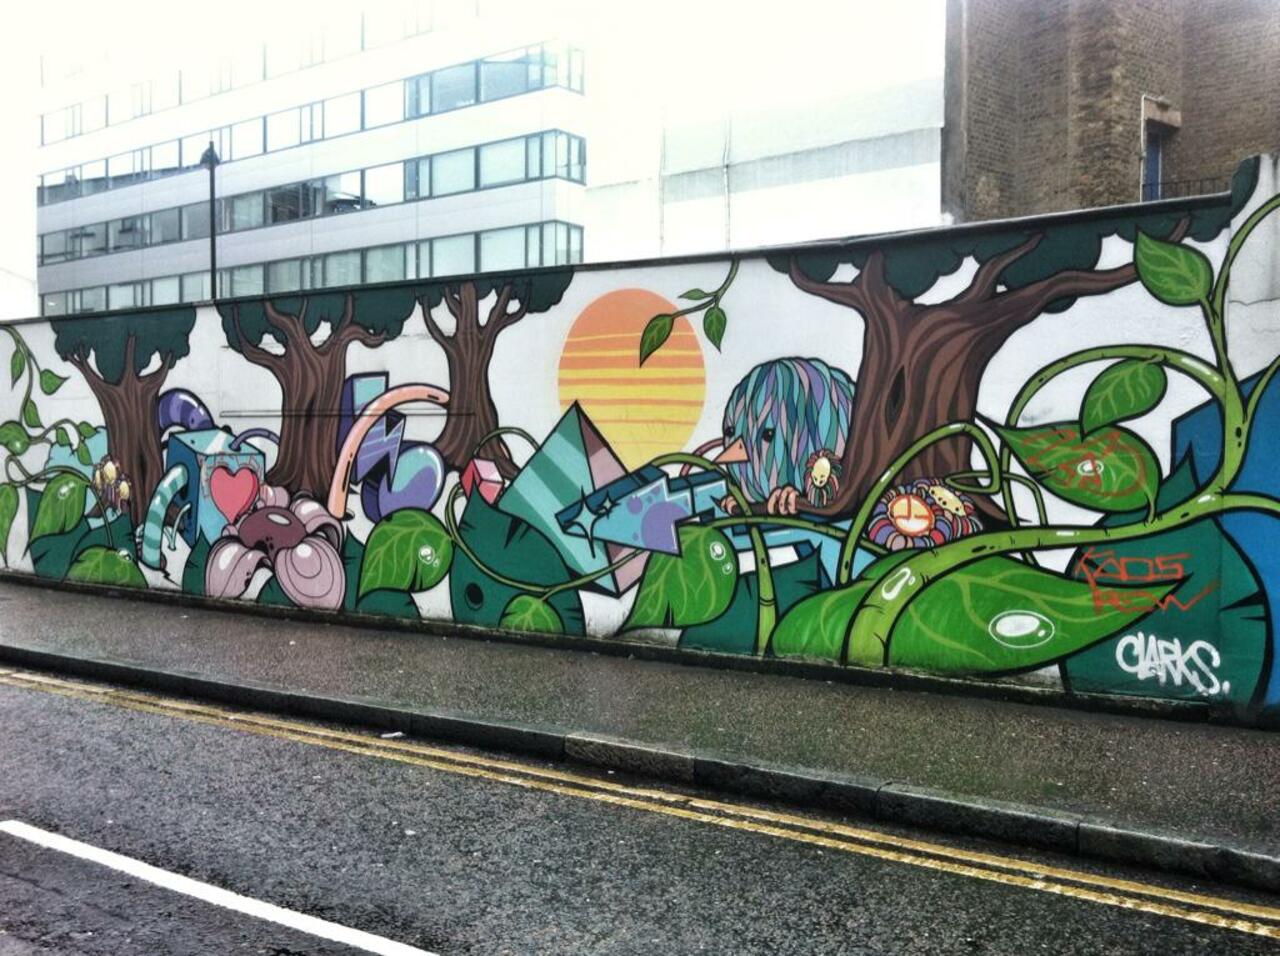 Mural in (I think) Singer Street #Clarks

#art #StreetArt #graffiti @ShoreditchTours @ShoreditchGraf http://t.co/5MZUjQWjJM